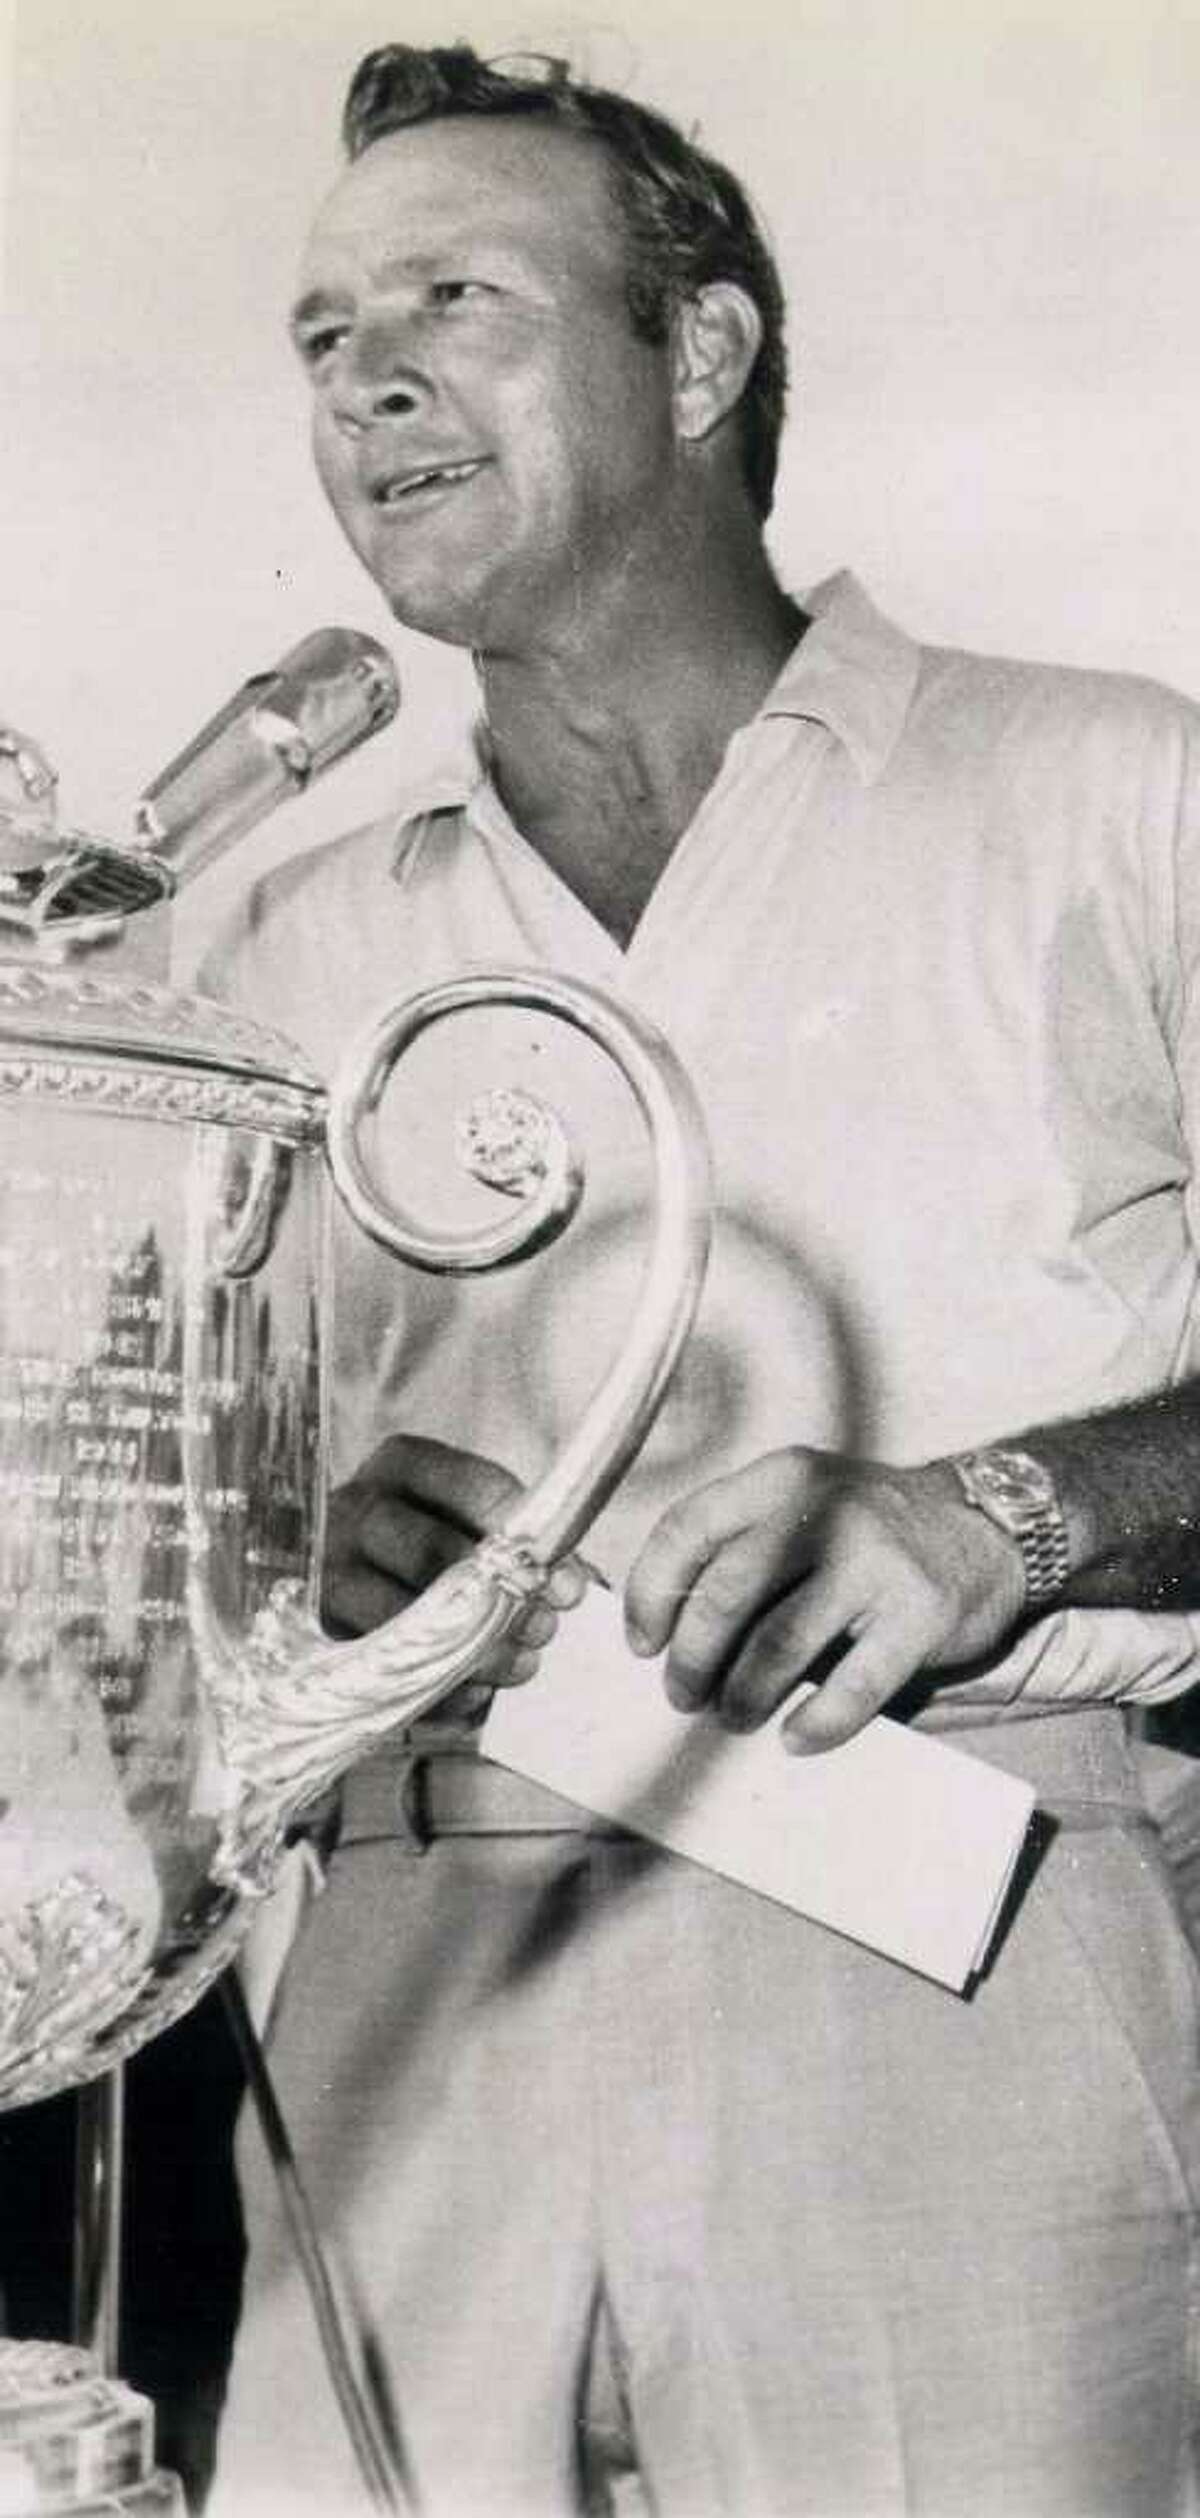 Q&A with golf legend Arnold Palmer